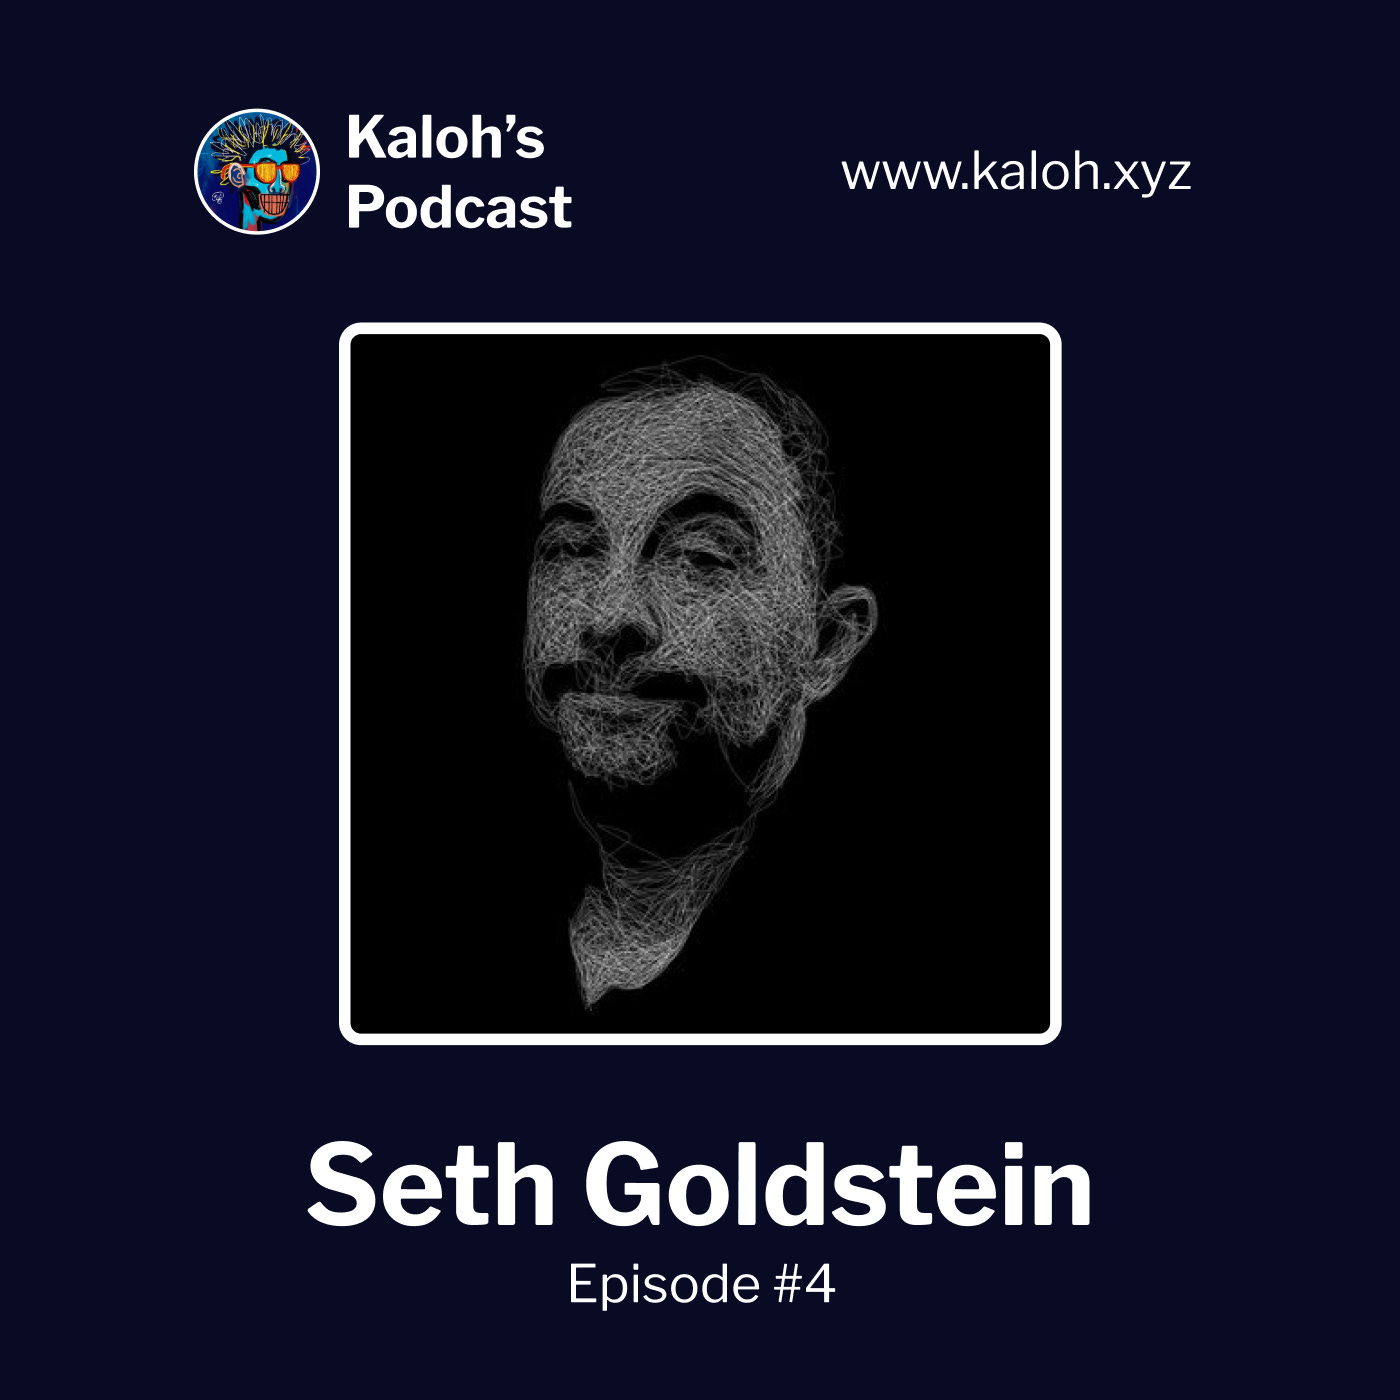 Kaloh’s Podcast Episode #4: Seth Goldstein.